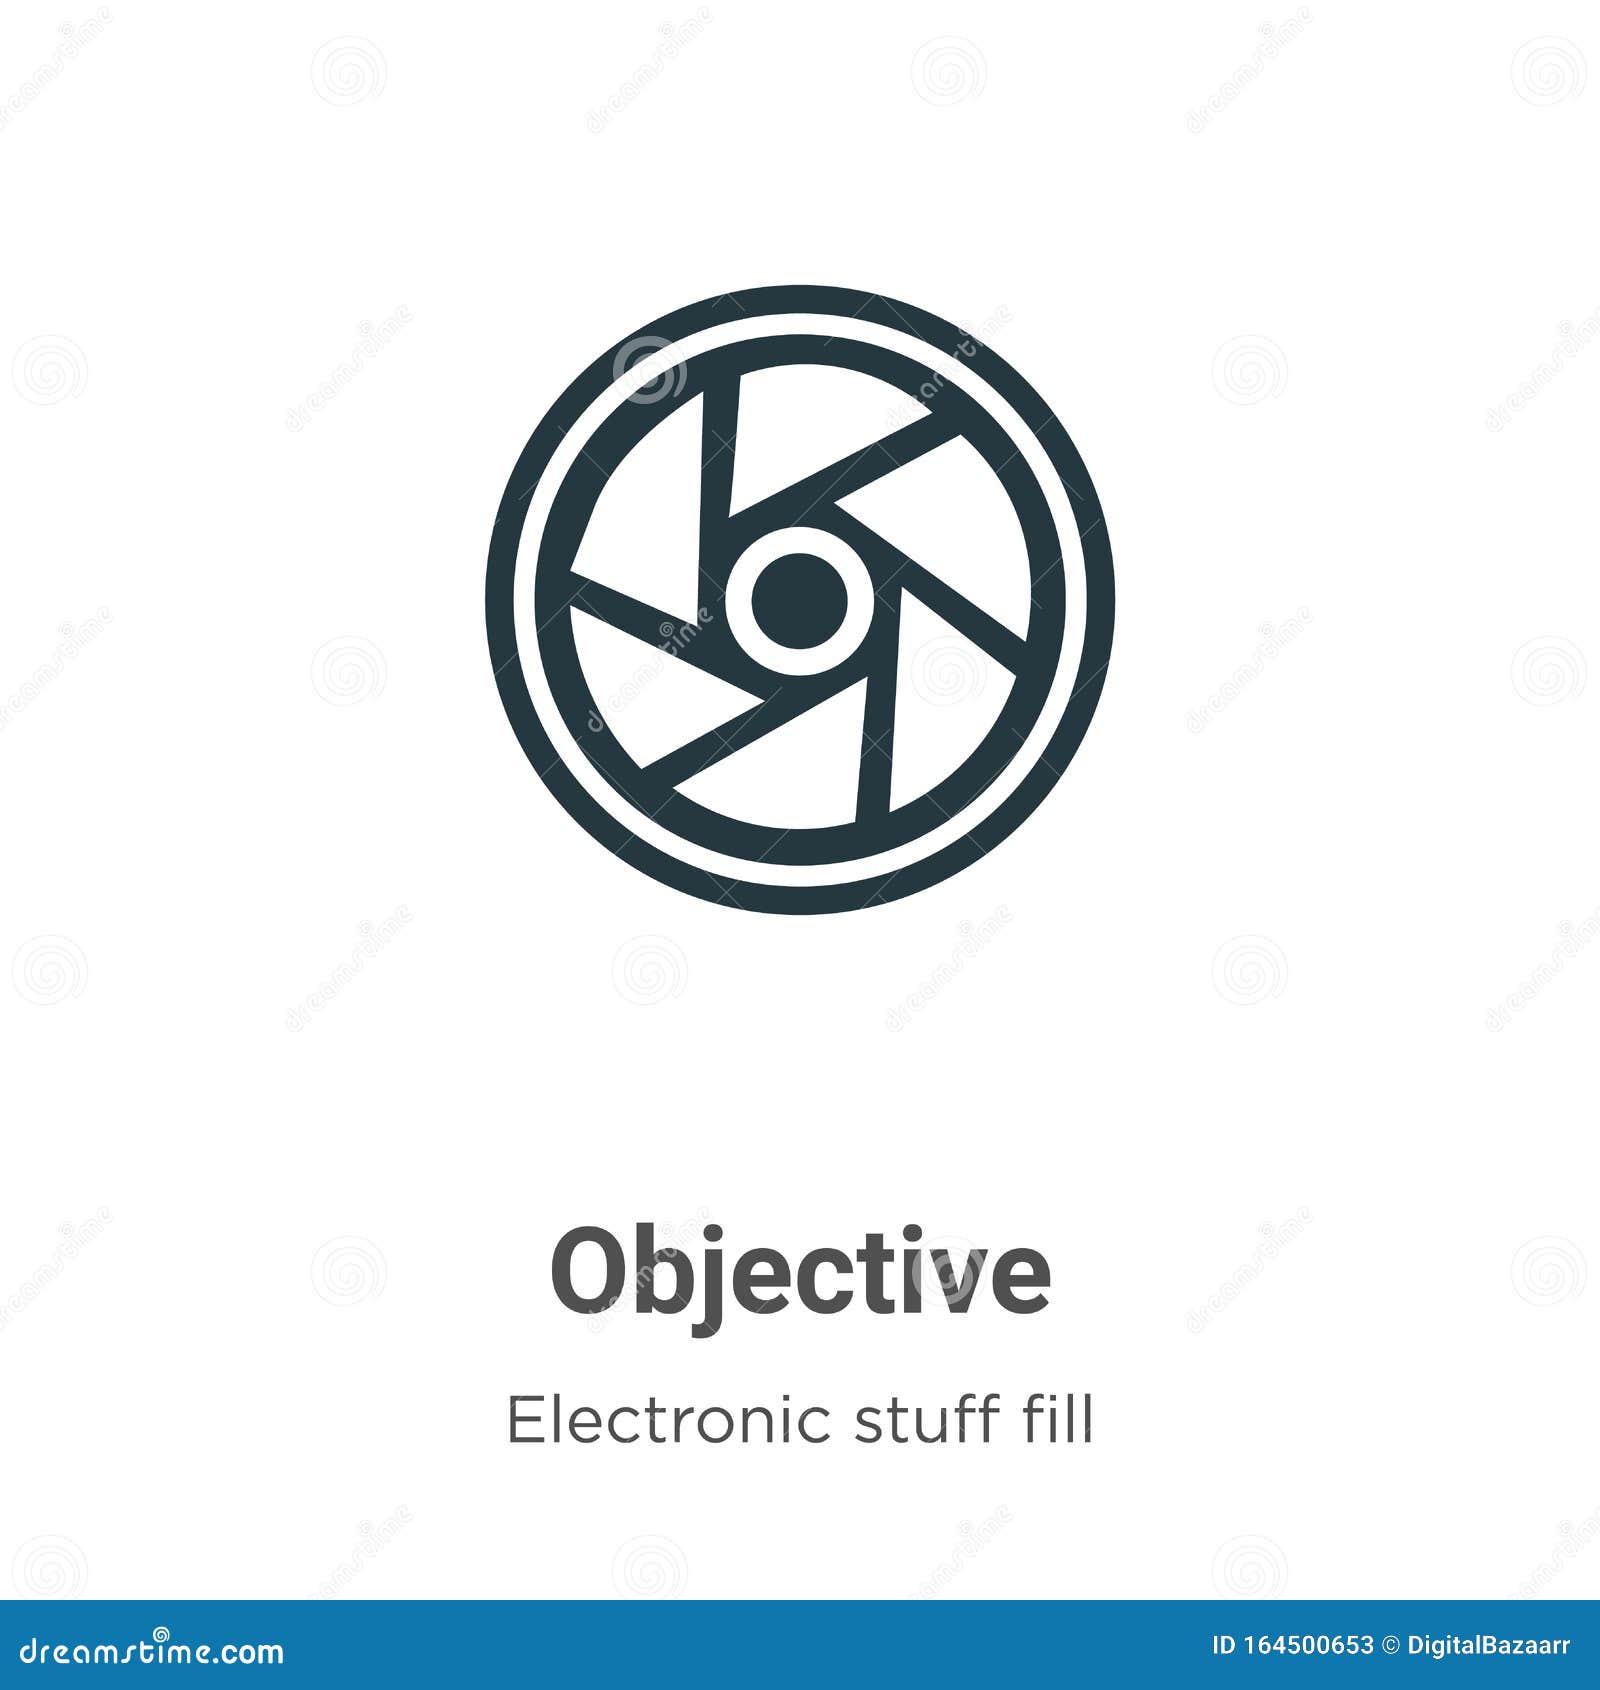 Objective Corporation